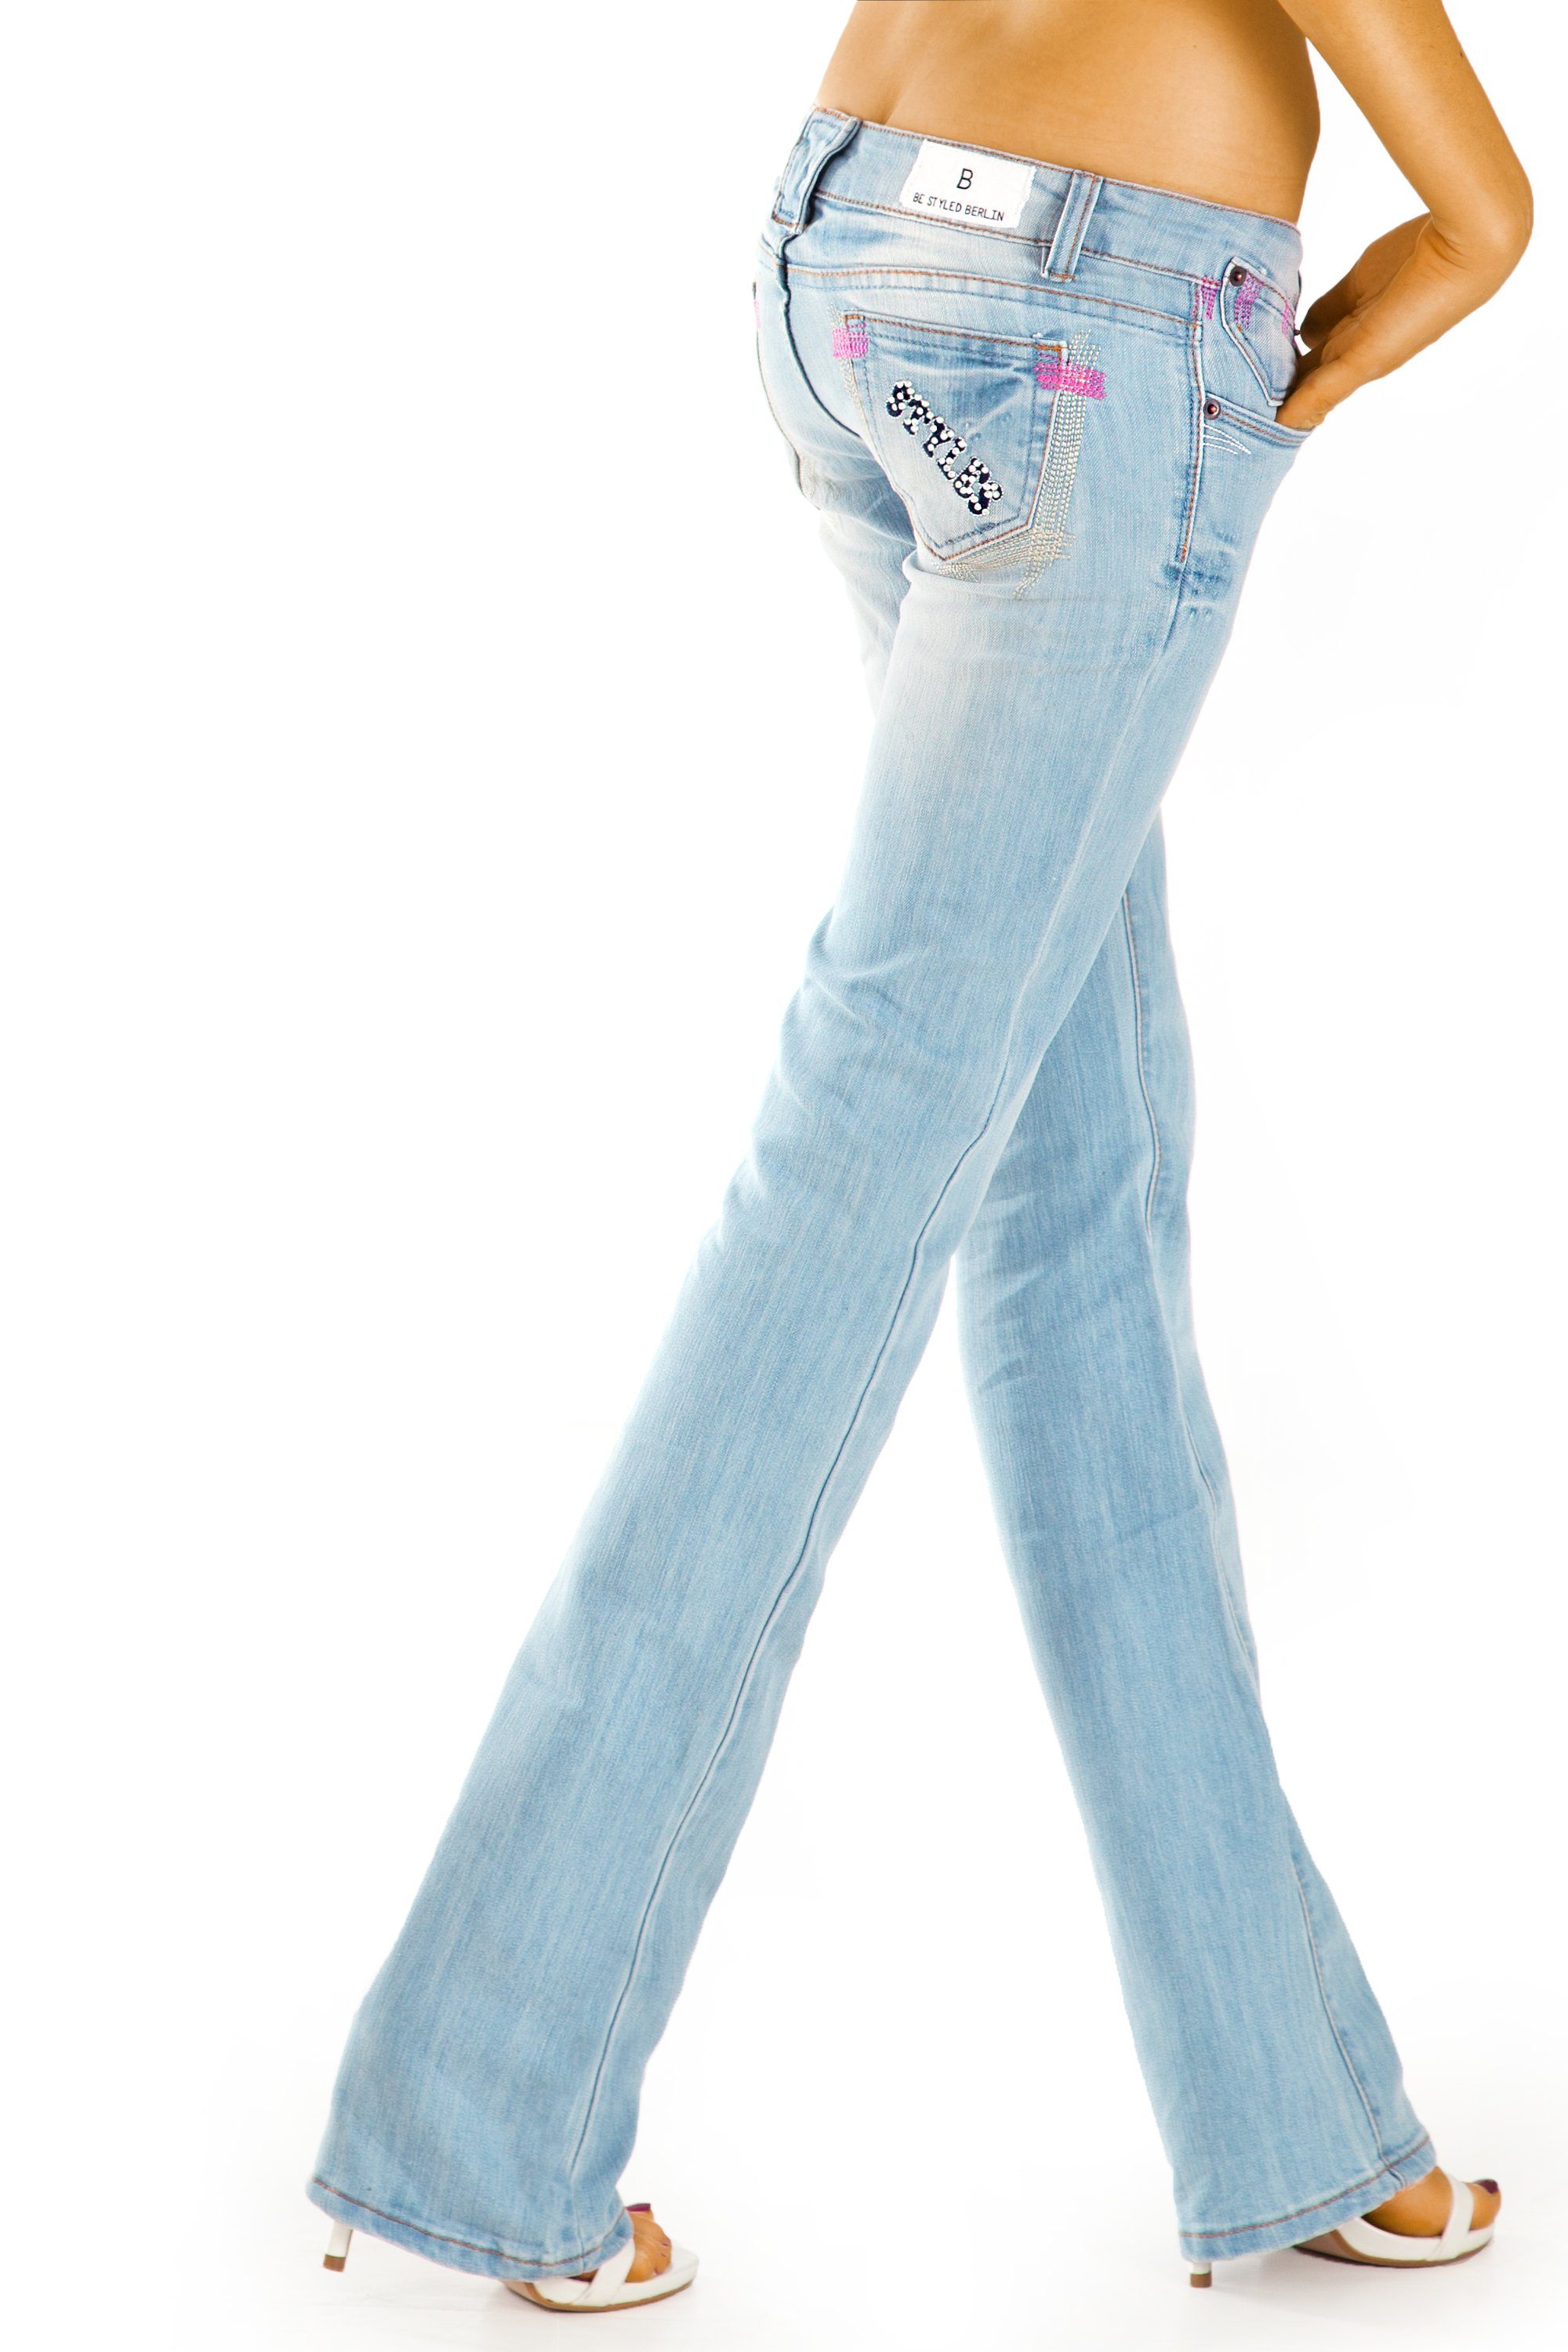 tiefer 5-pOcket-Style Stretch-Anteil, Leibhöhe, Bootcut - extrem Leibhöhe - styled Bootcut-Jeans Jeanshose sehr Damen j37a-1 be mit Hüftjeans niedrige